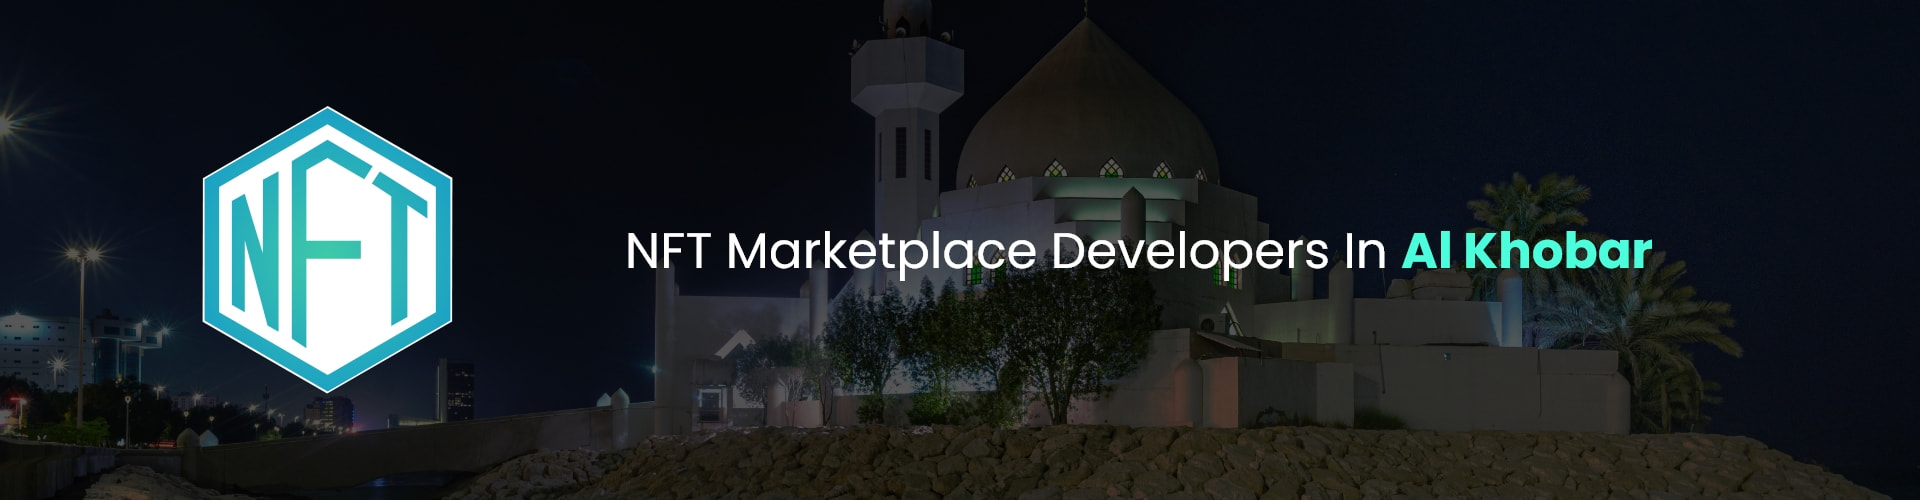 hire nft marketplace developers in Al Khobar